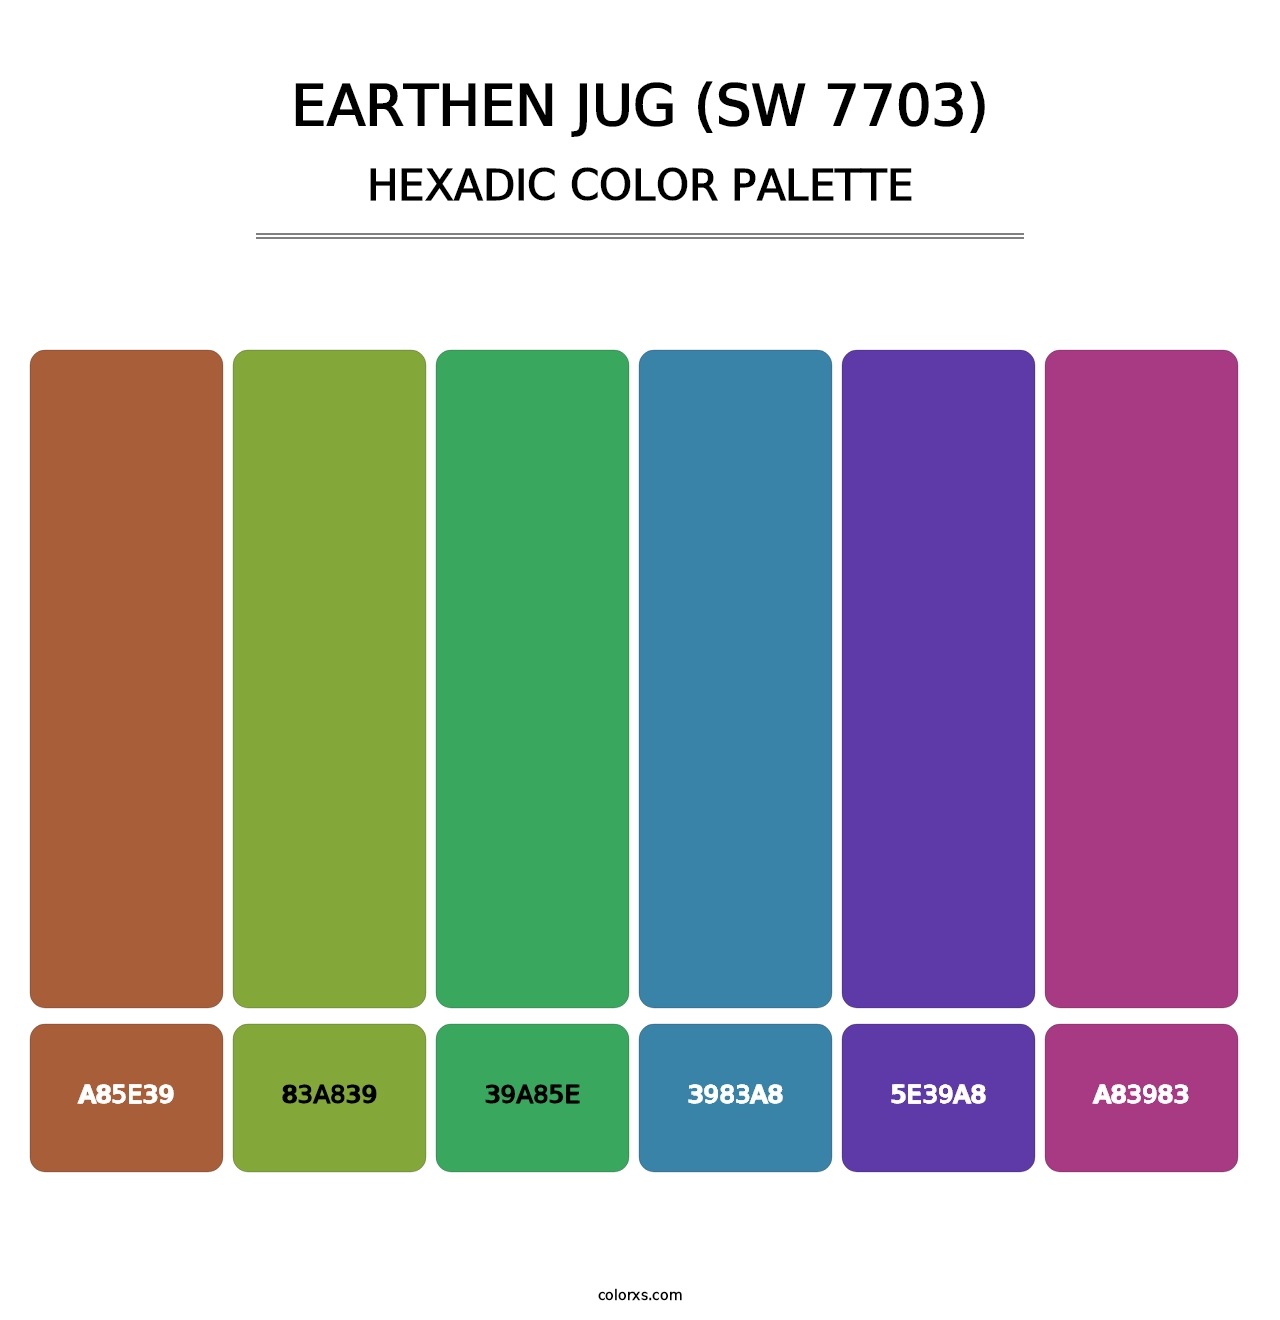 Earthen Jug (SW 7703) - Hexadic Color Palette